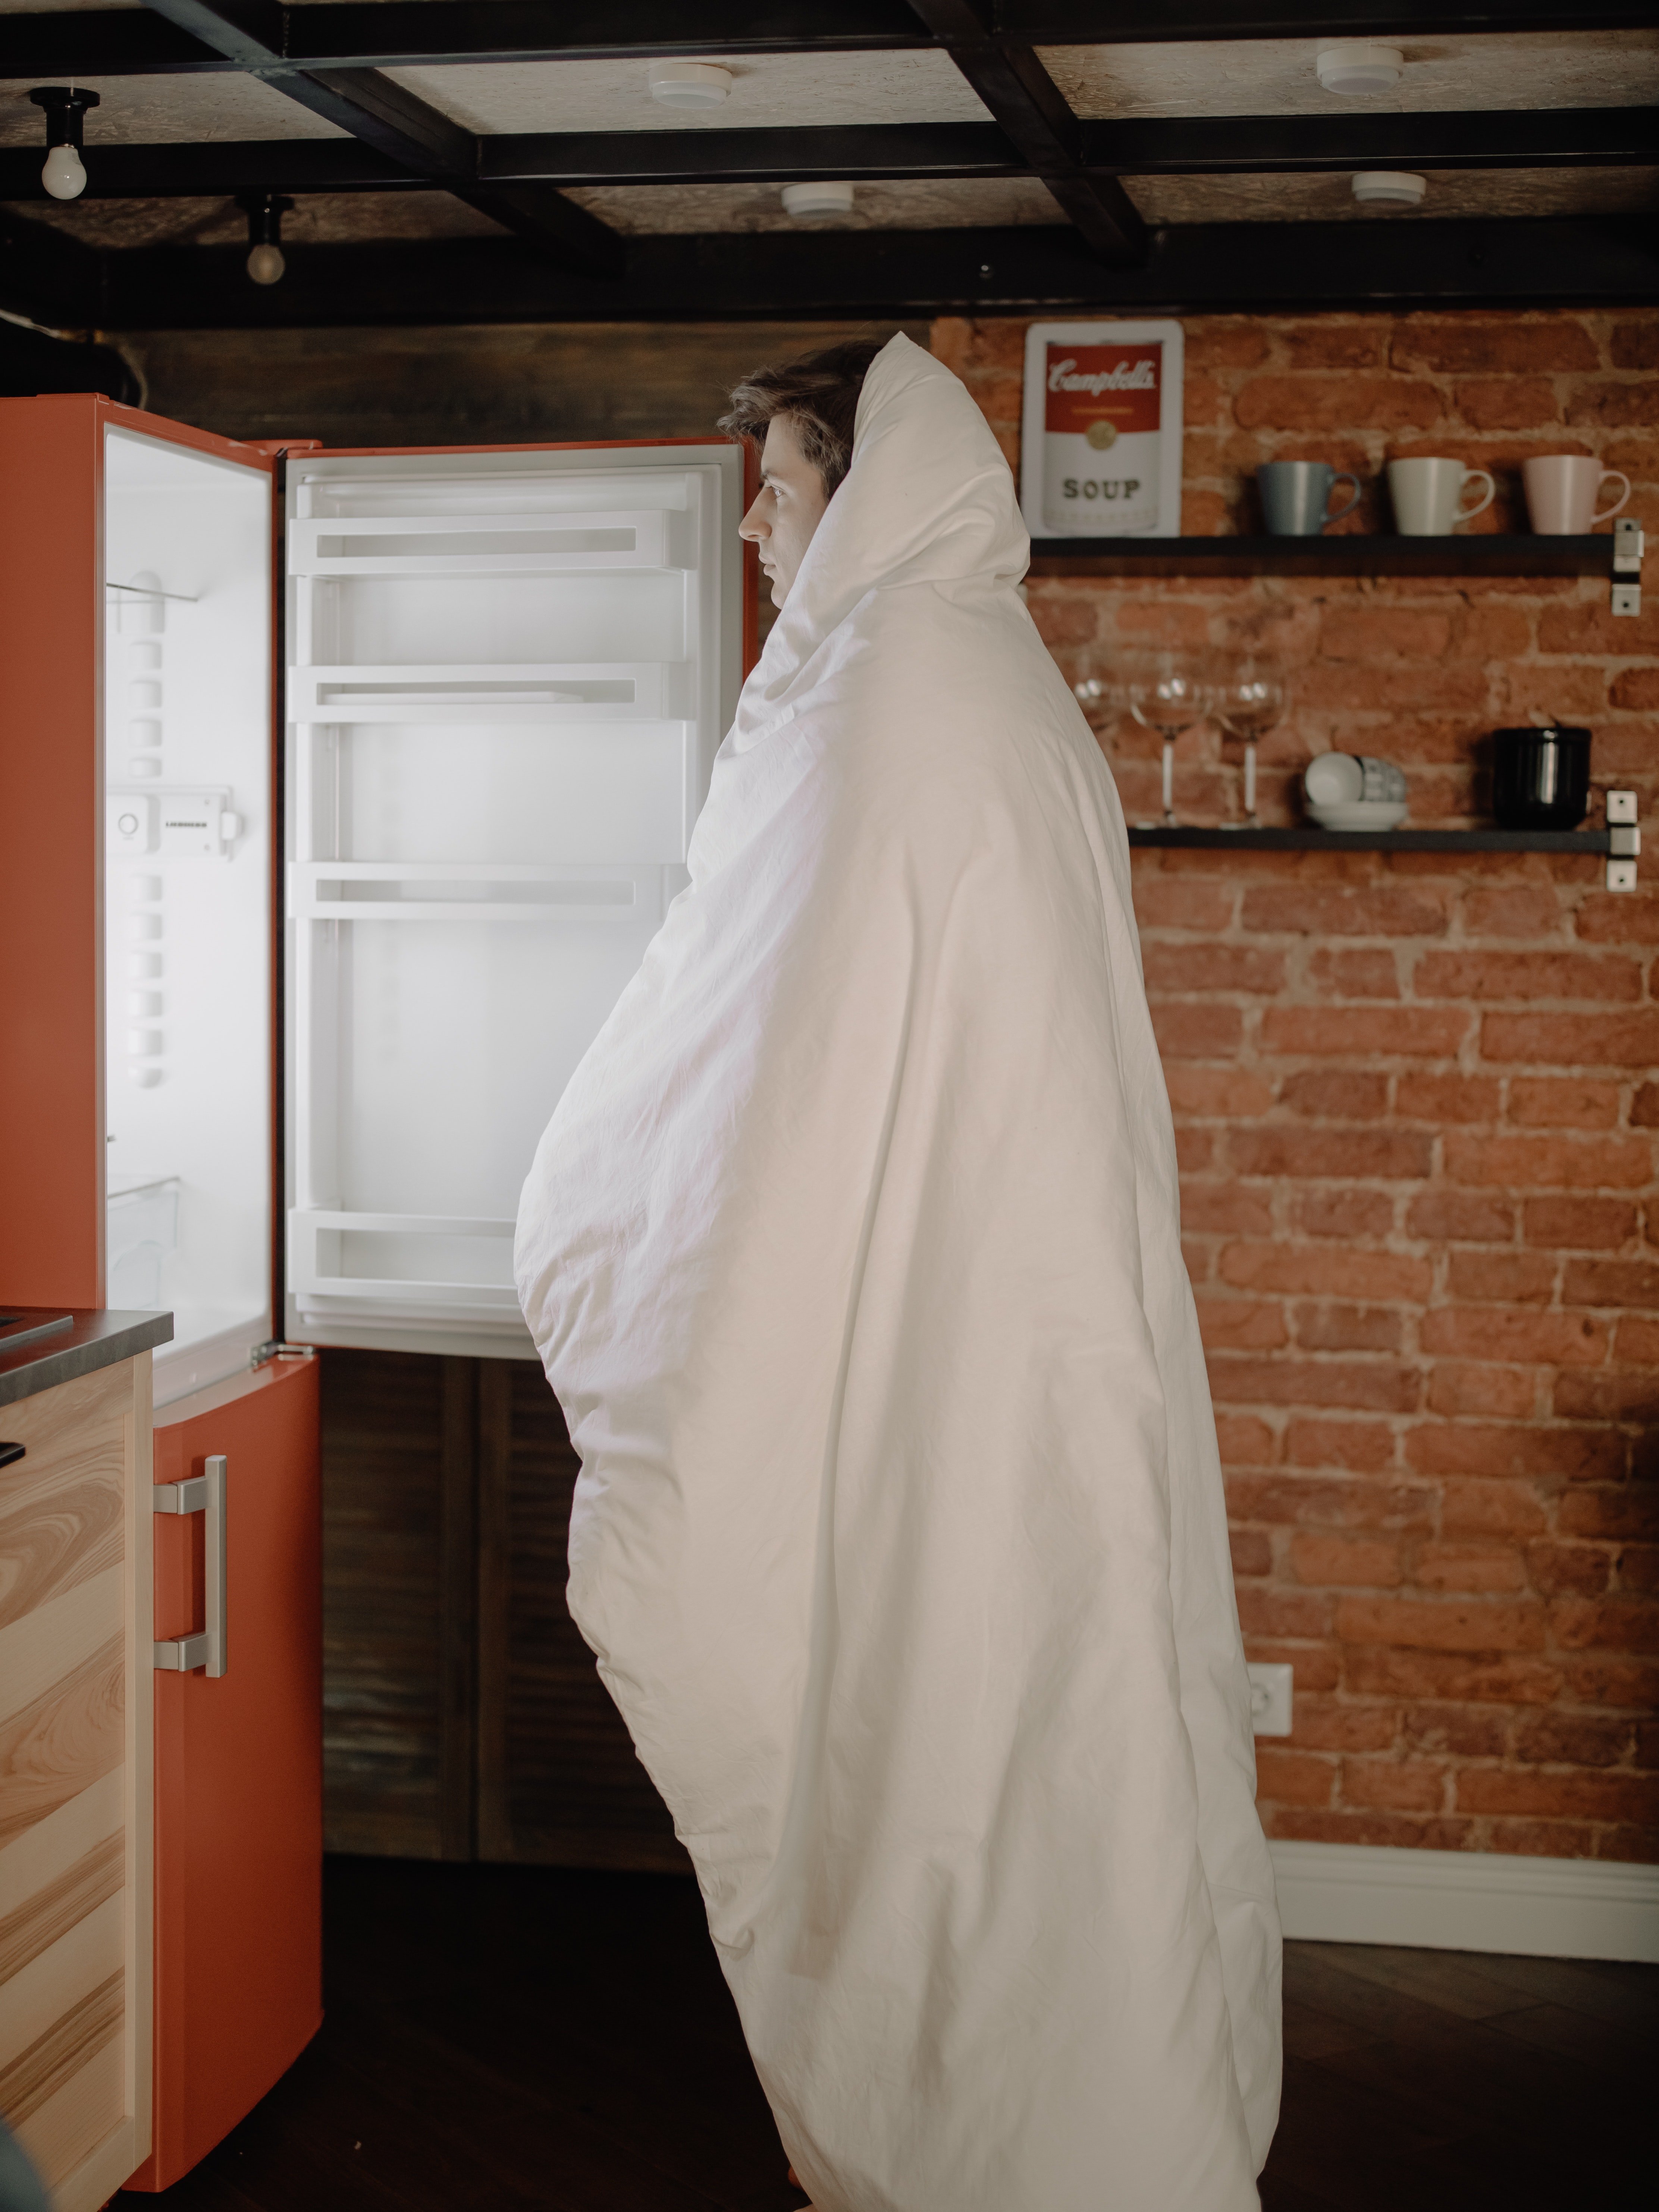 Thomas fand abgelaufene Lebensmittel im Kühlschrank | Quelle: Pexels